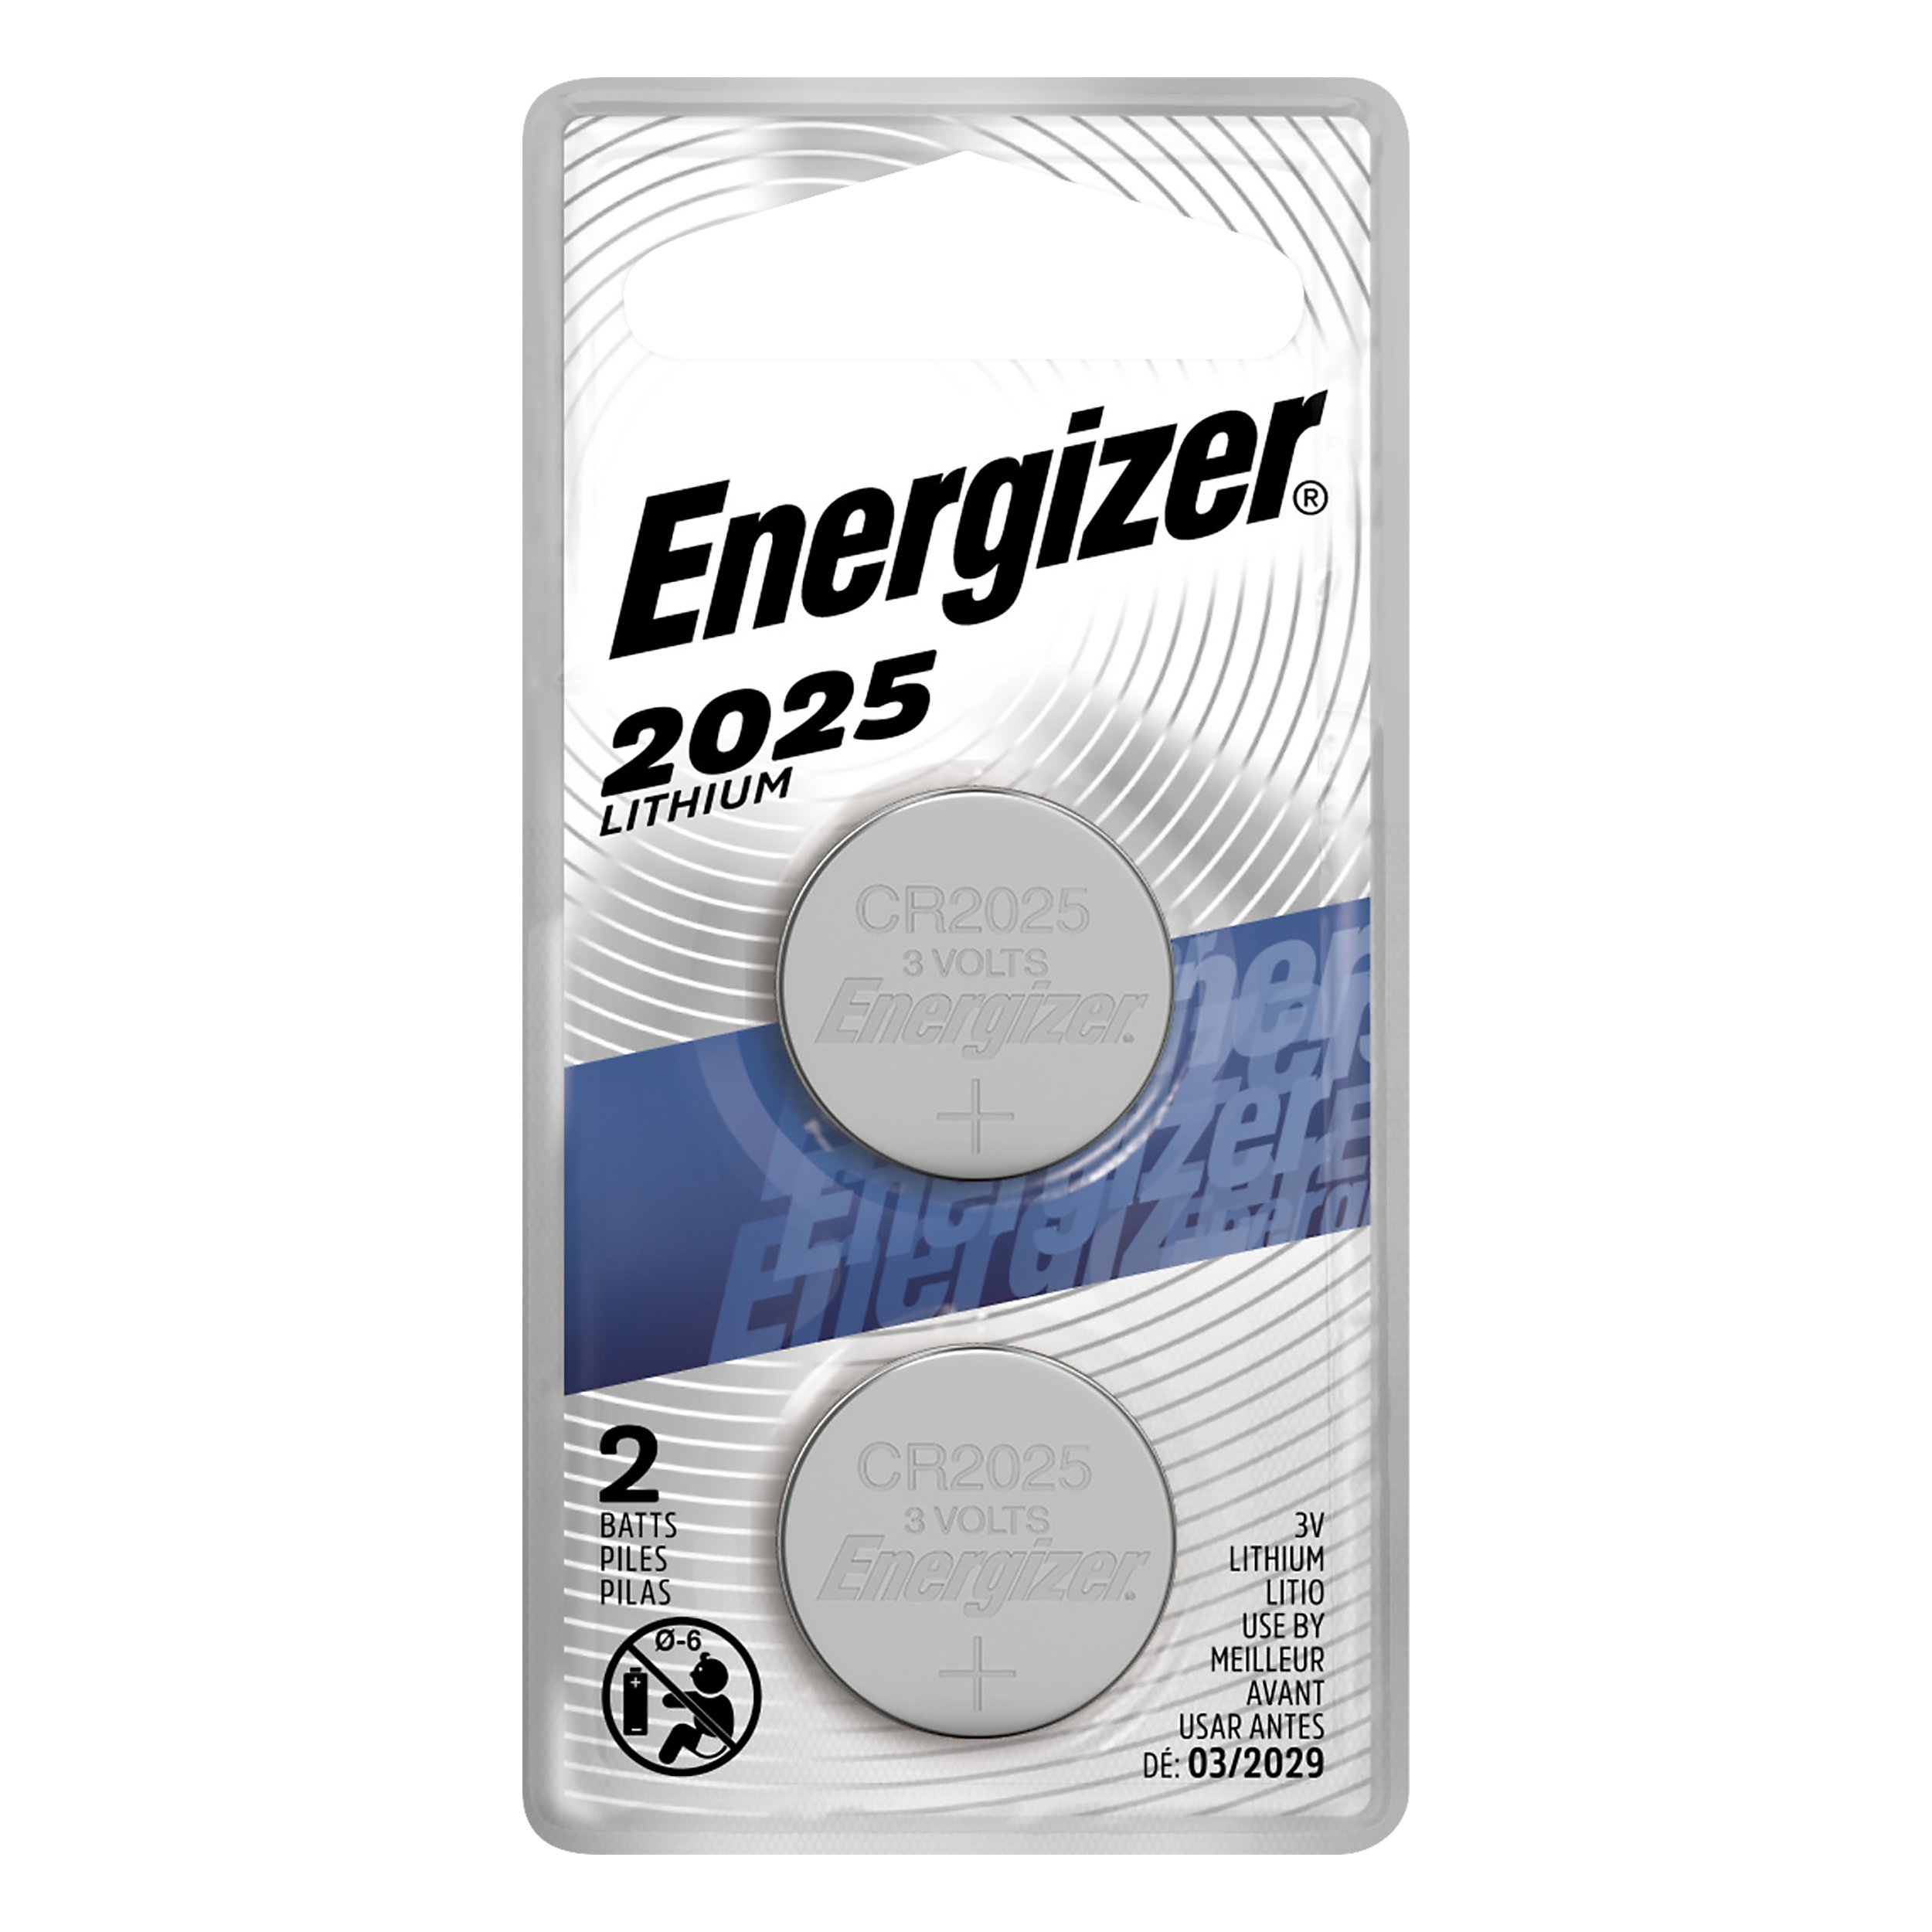 Energizer CR2025 Lithium Coin Batteries - Shop Batteries at H-E-B